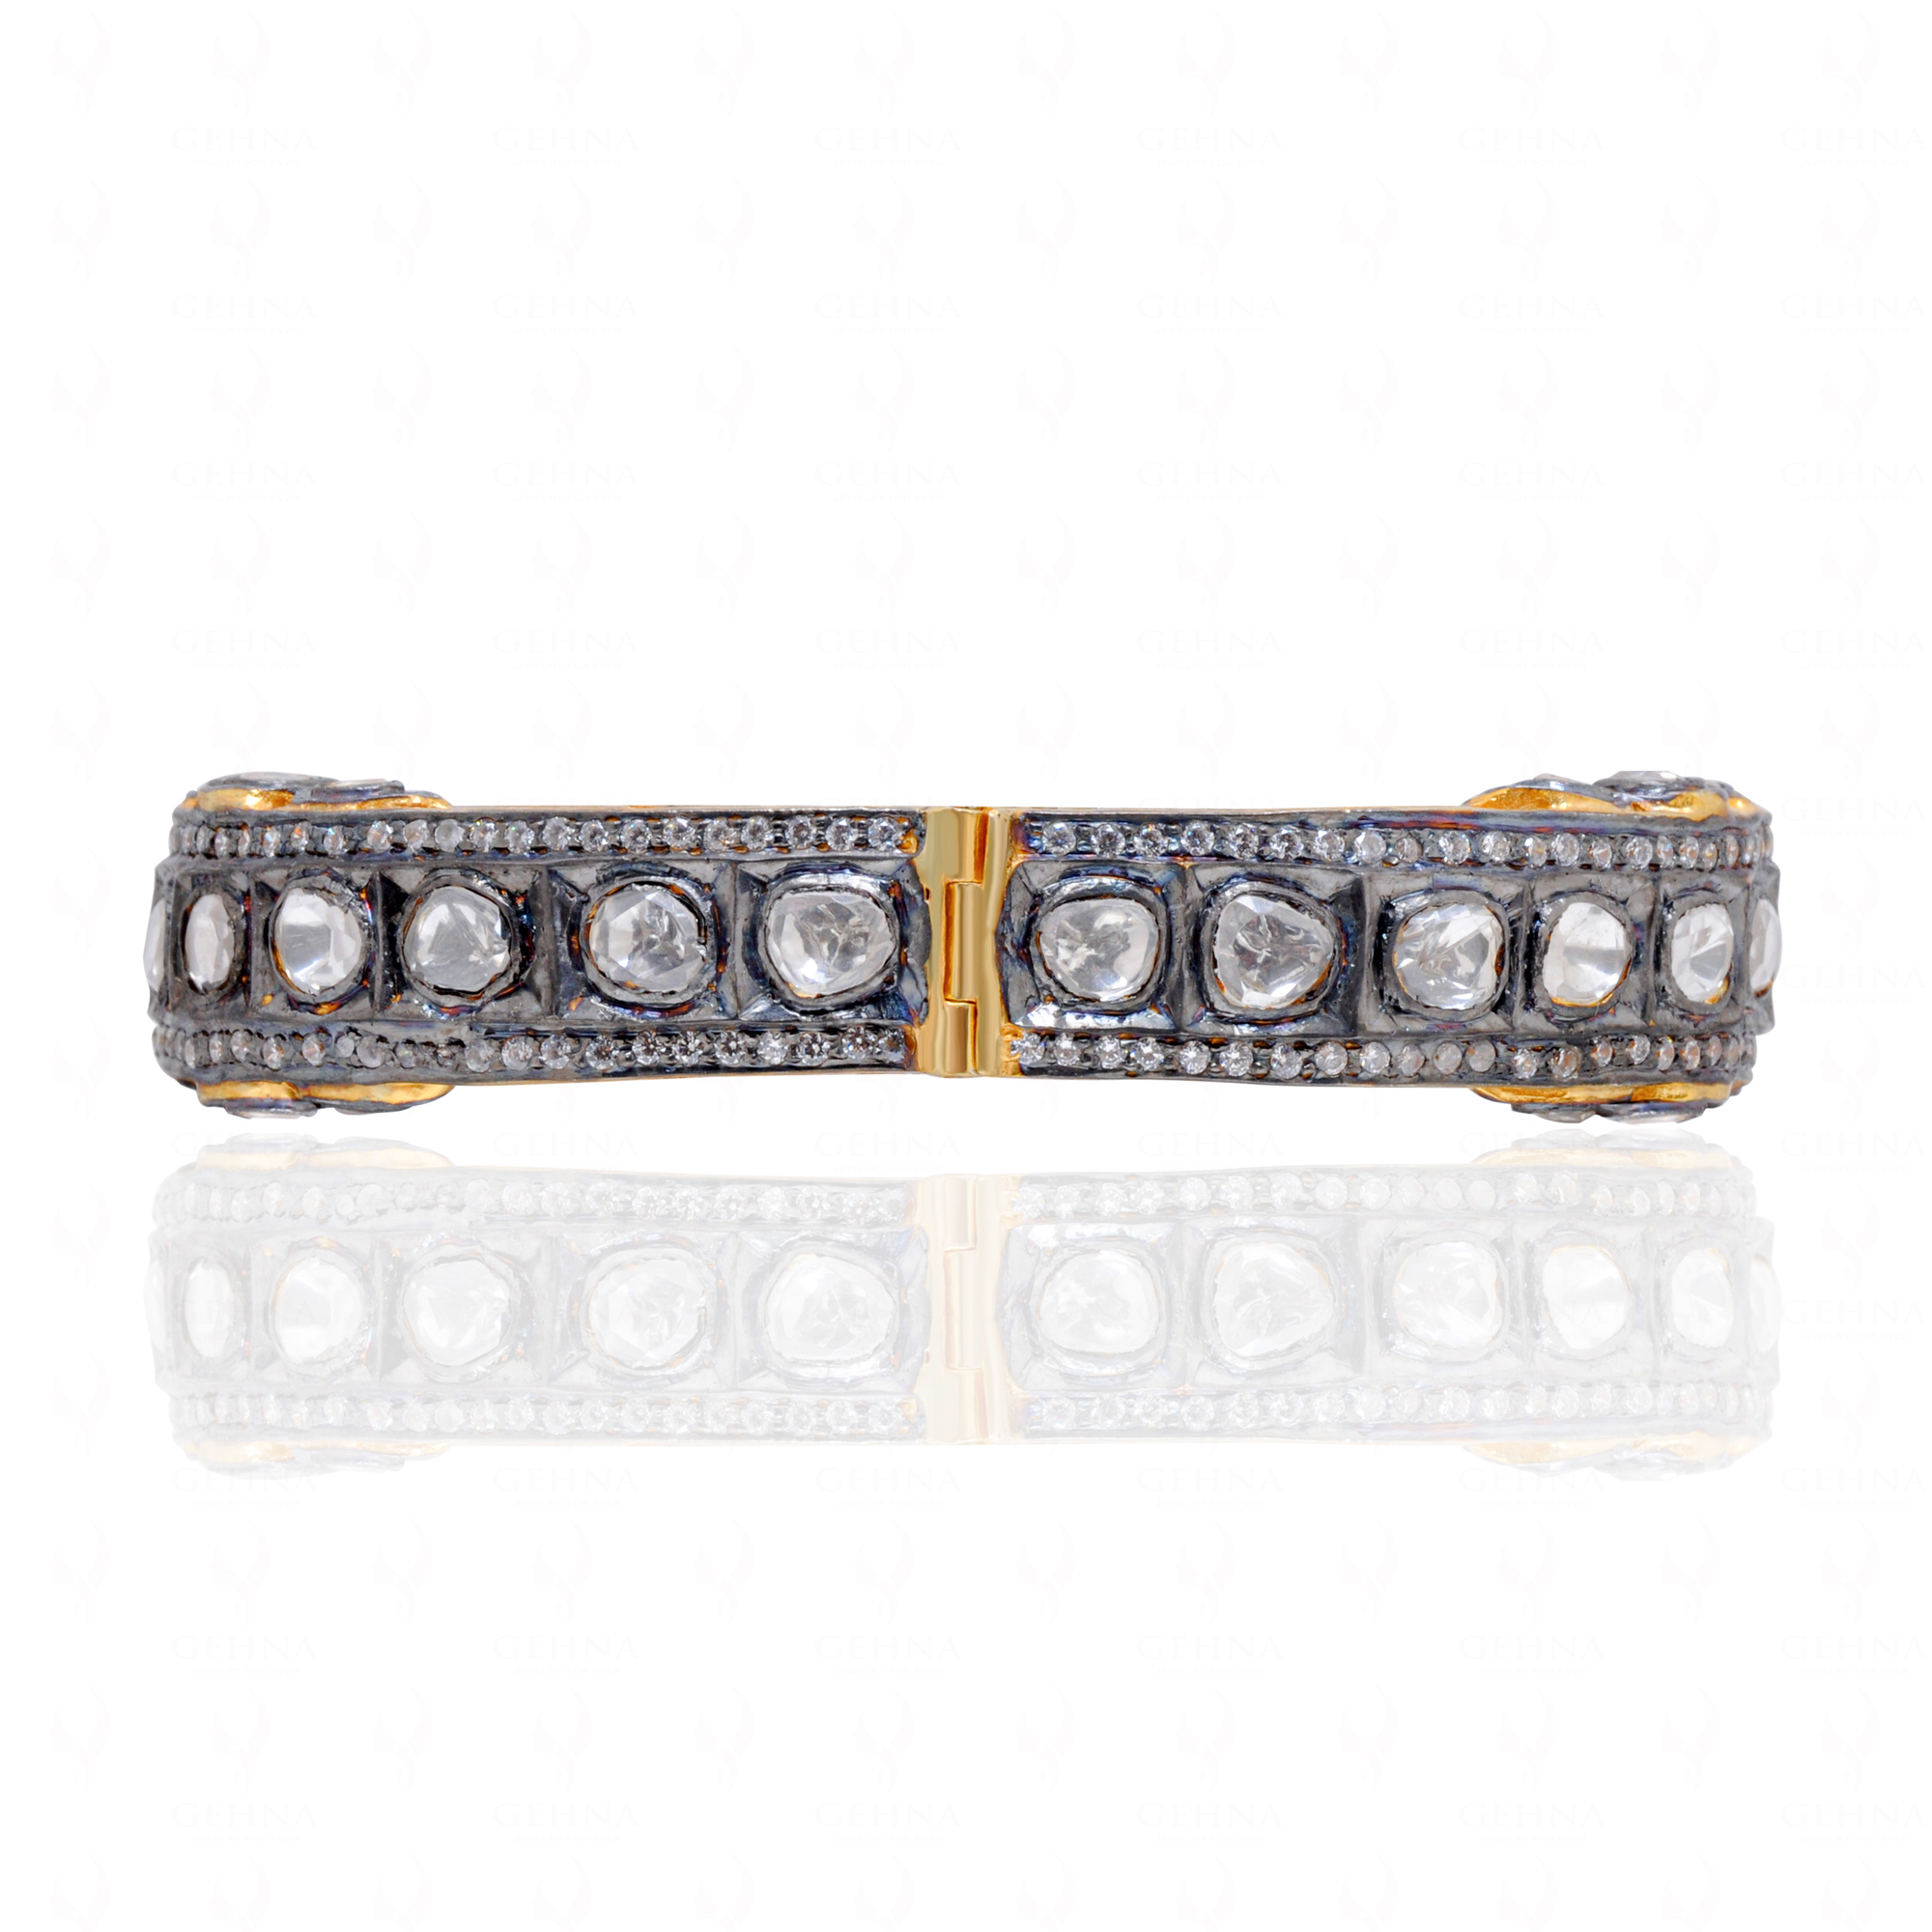 Modern Jewelry - Sapphire Studded 925 Solid Silver Bangle Bracelet Sb1057